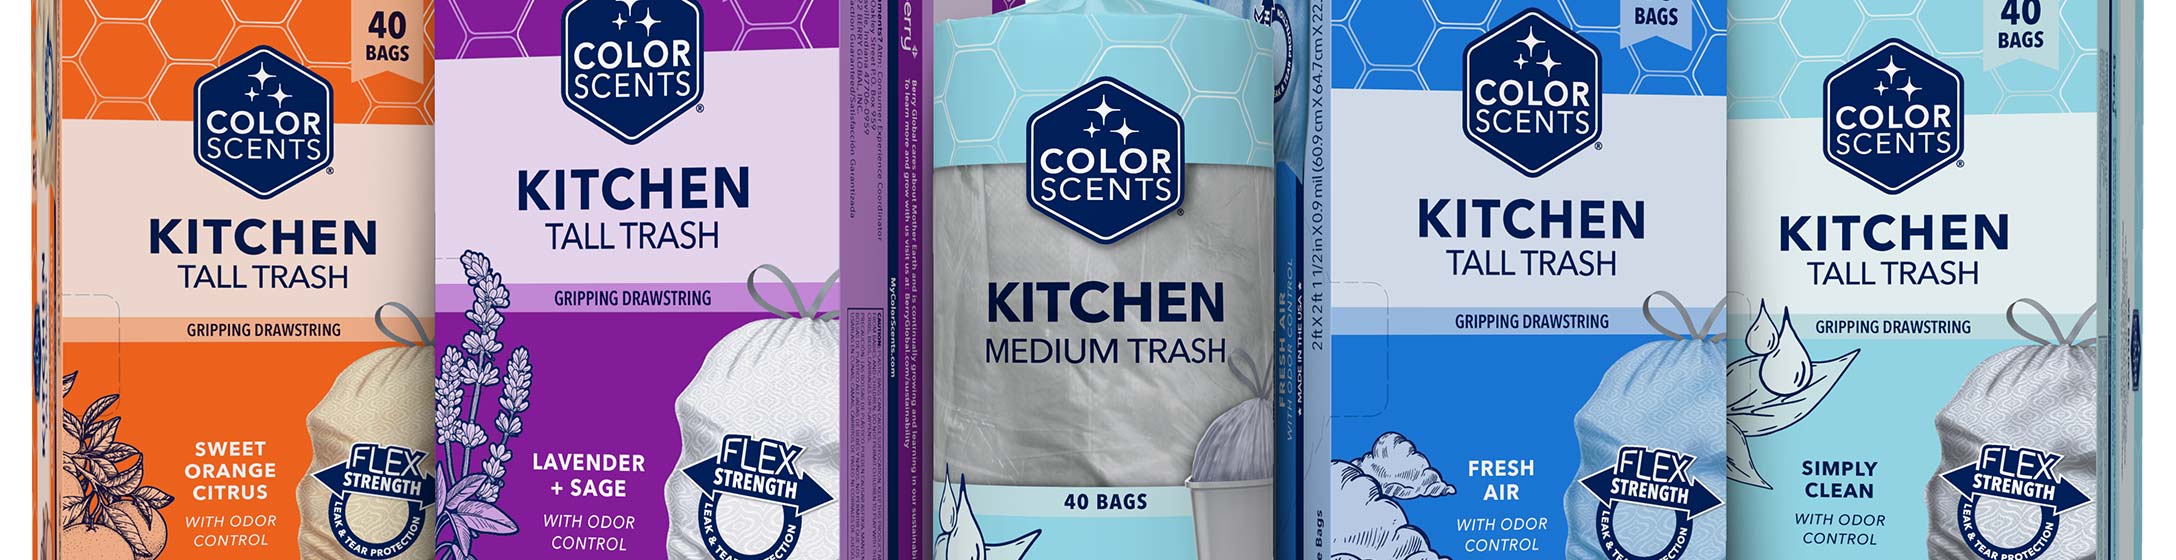 Color Scents Small Trash Bags, 4 Gallon, 80 Bags (Ocean Mist Scent